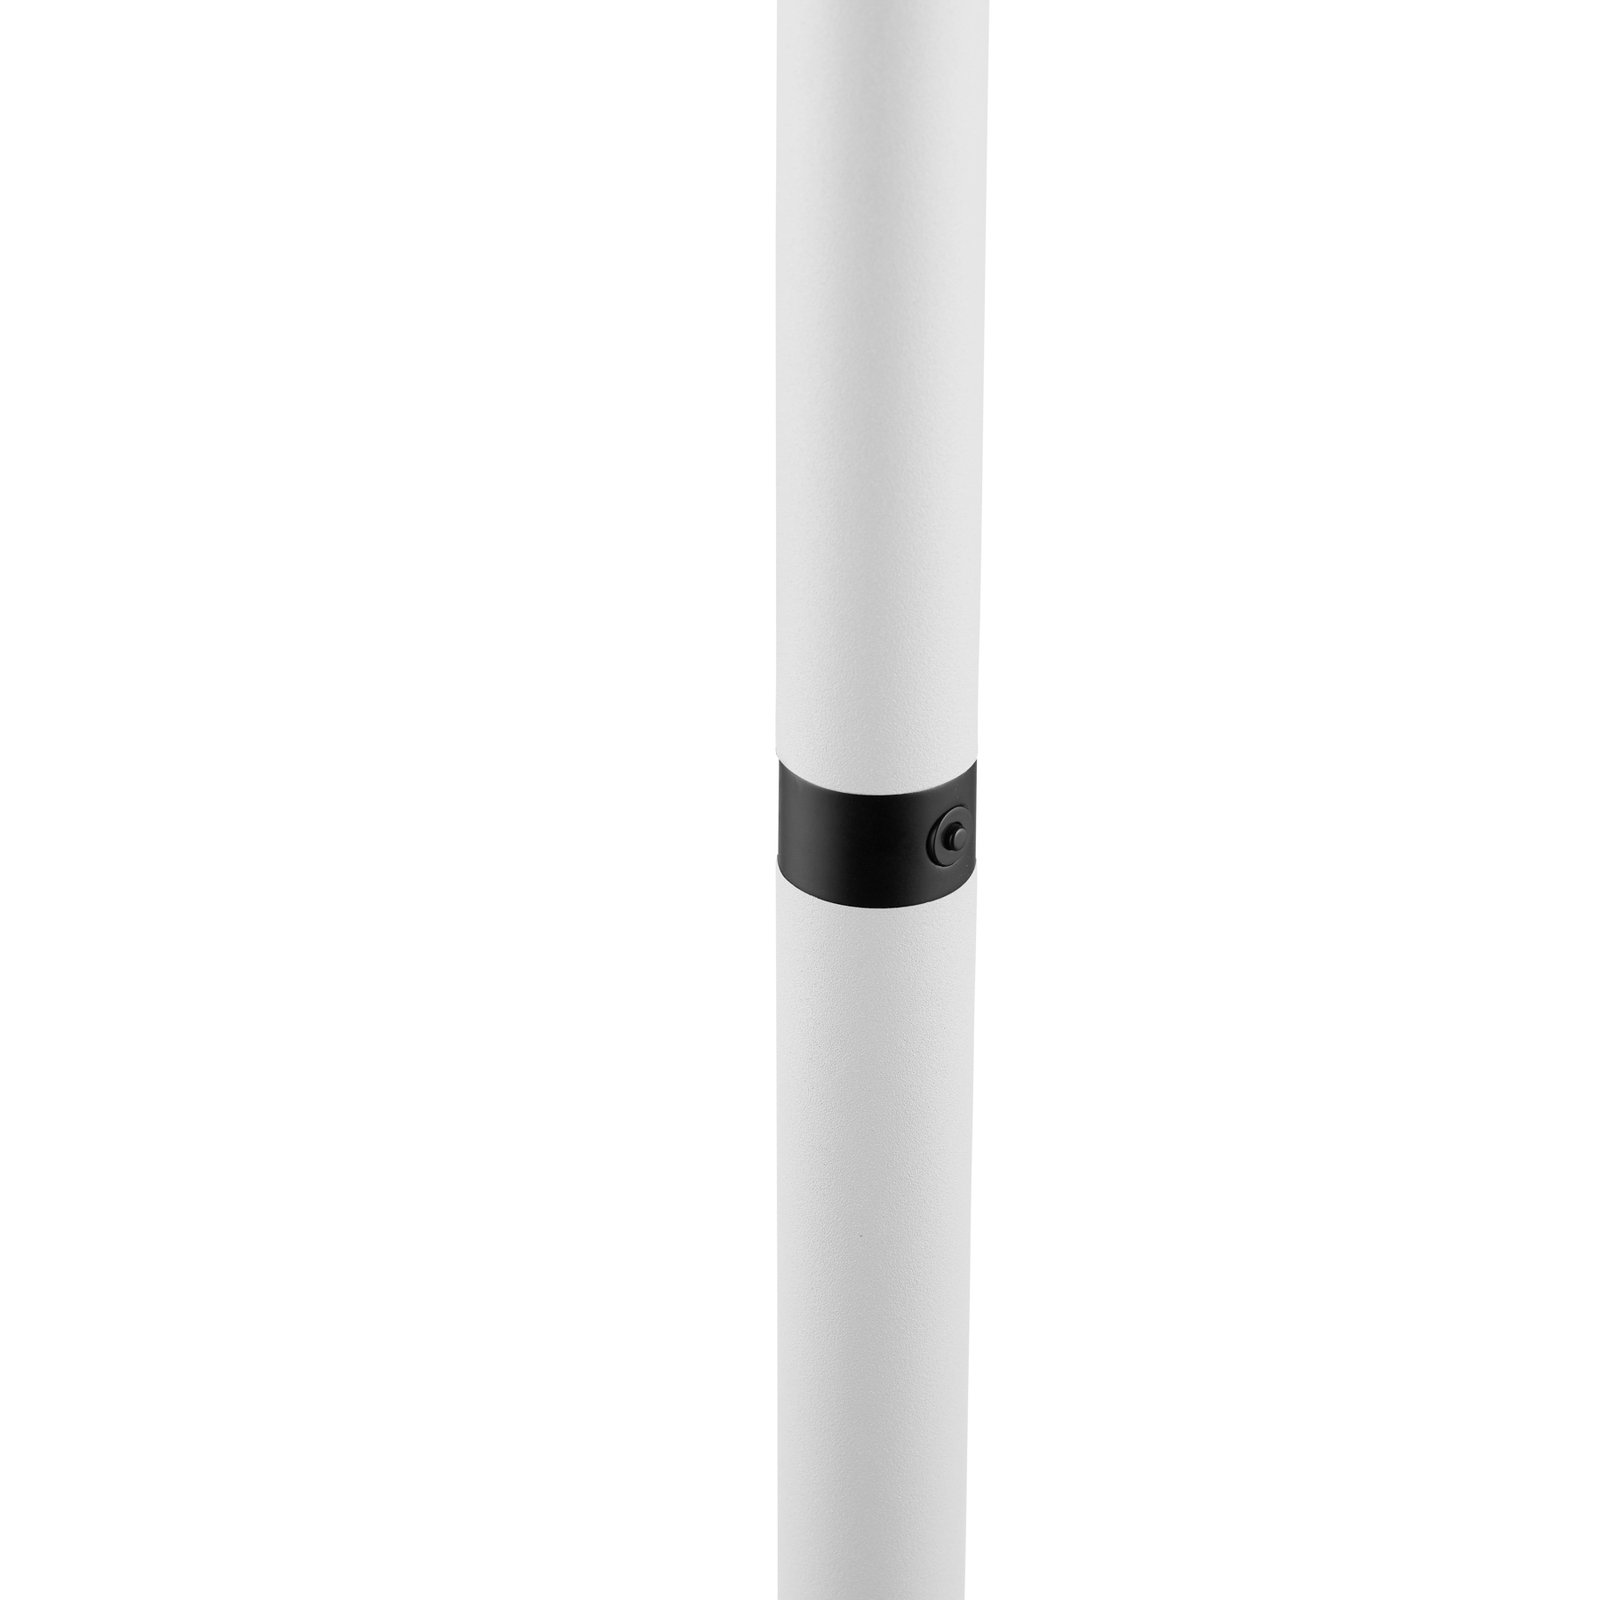 Lampa stojąca LED Evolo CCT, biała